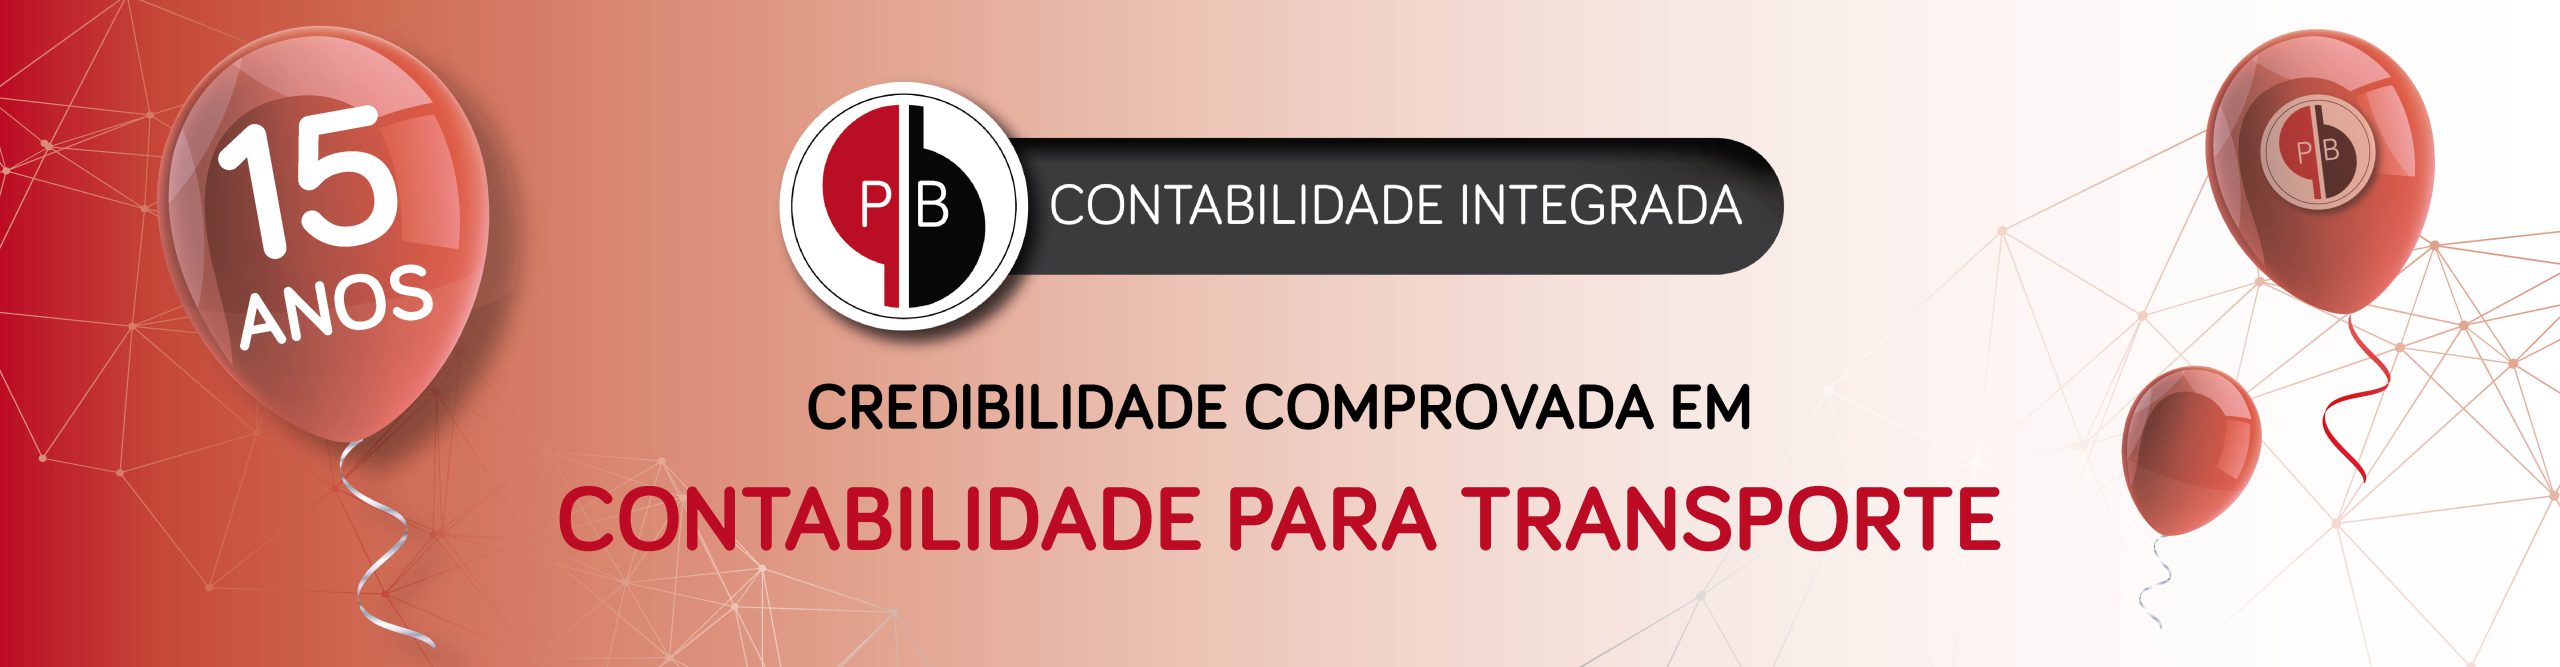 PB CONTABILIDADE INTEGRADA - slogan-01